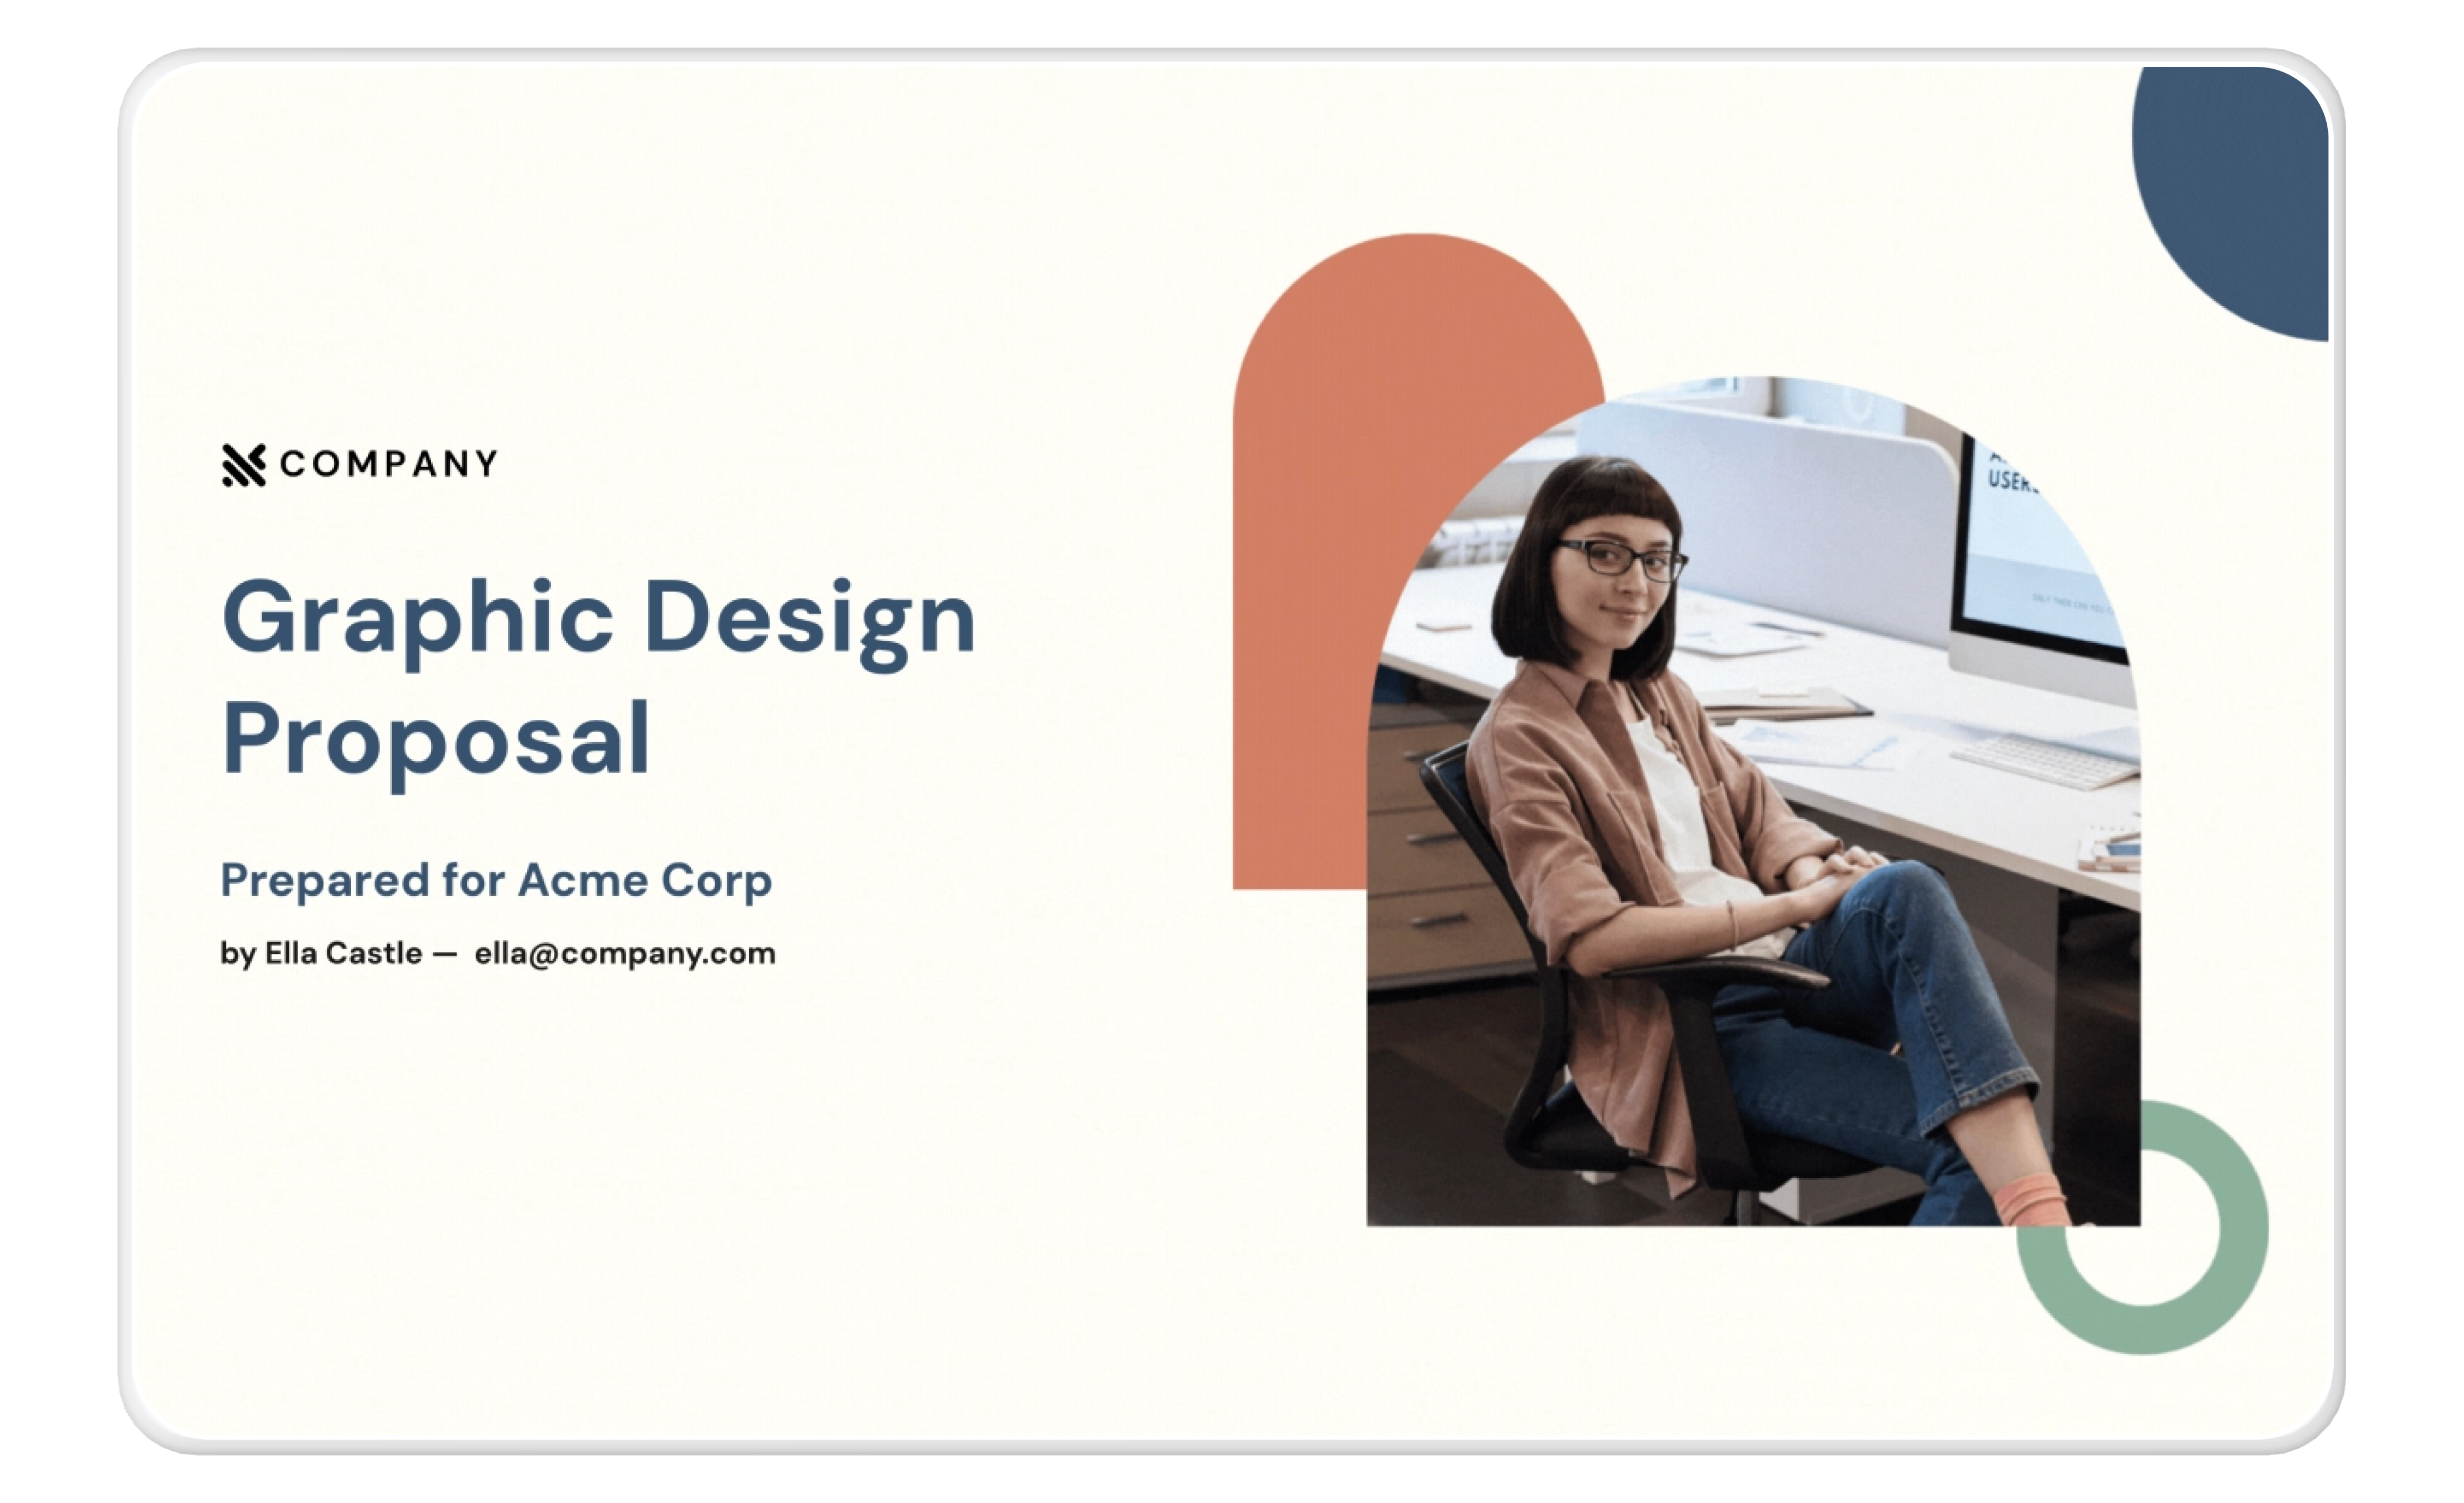 a graphic design proposal prepared for acme corp